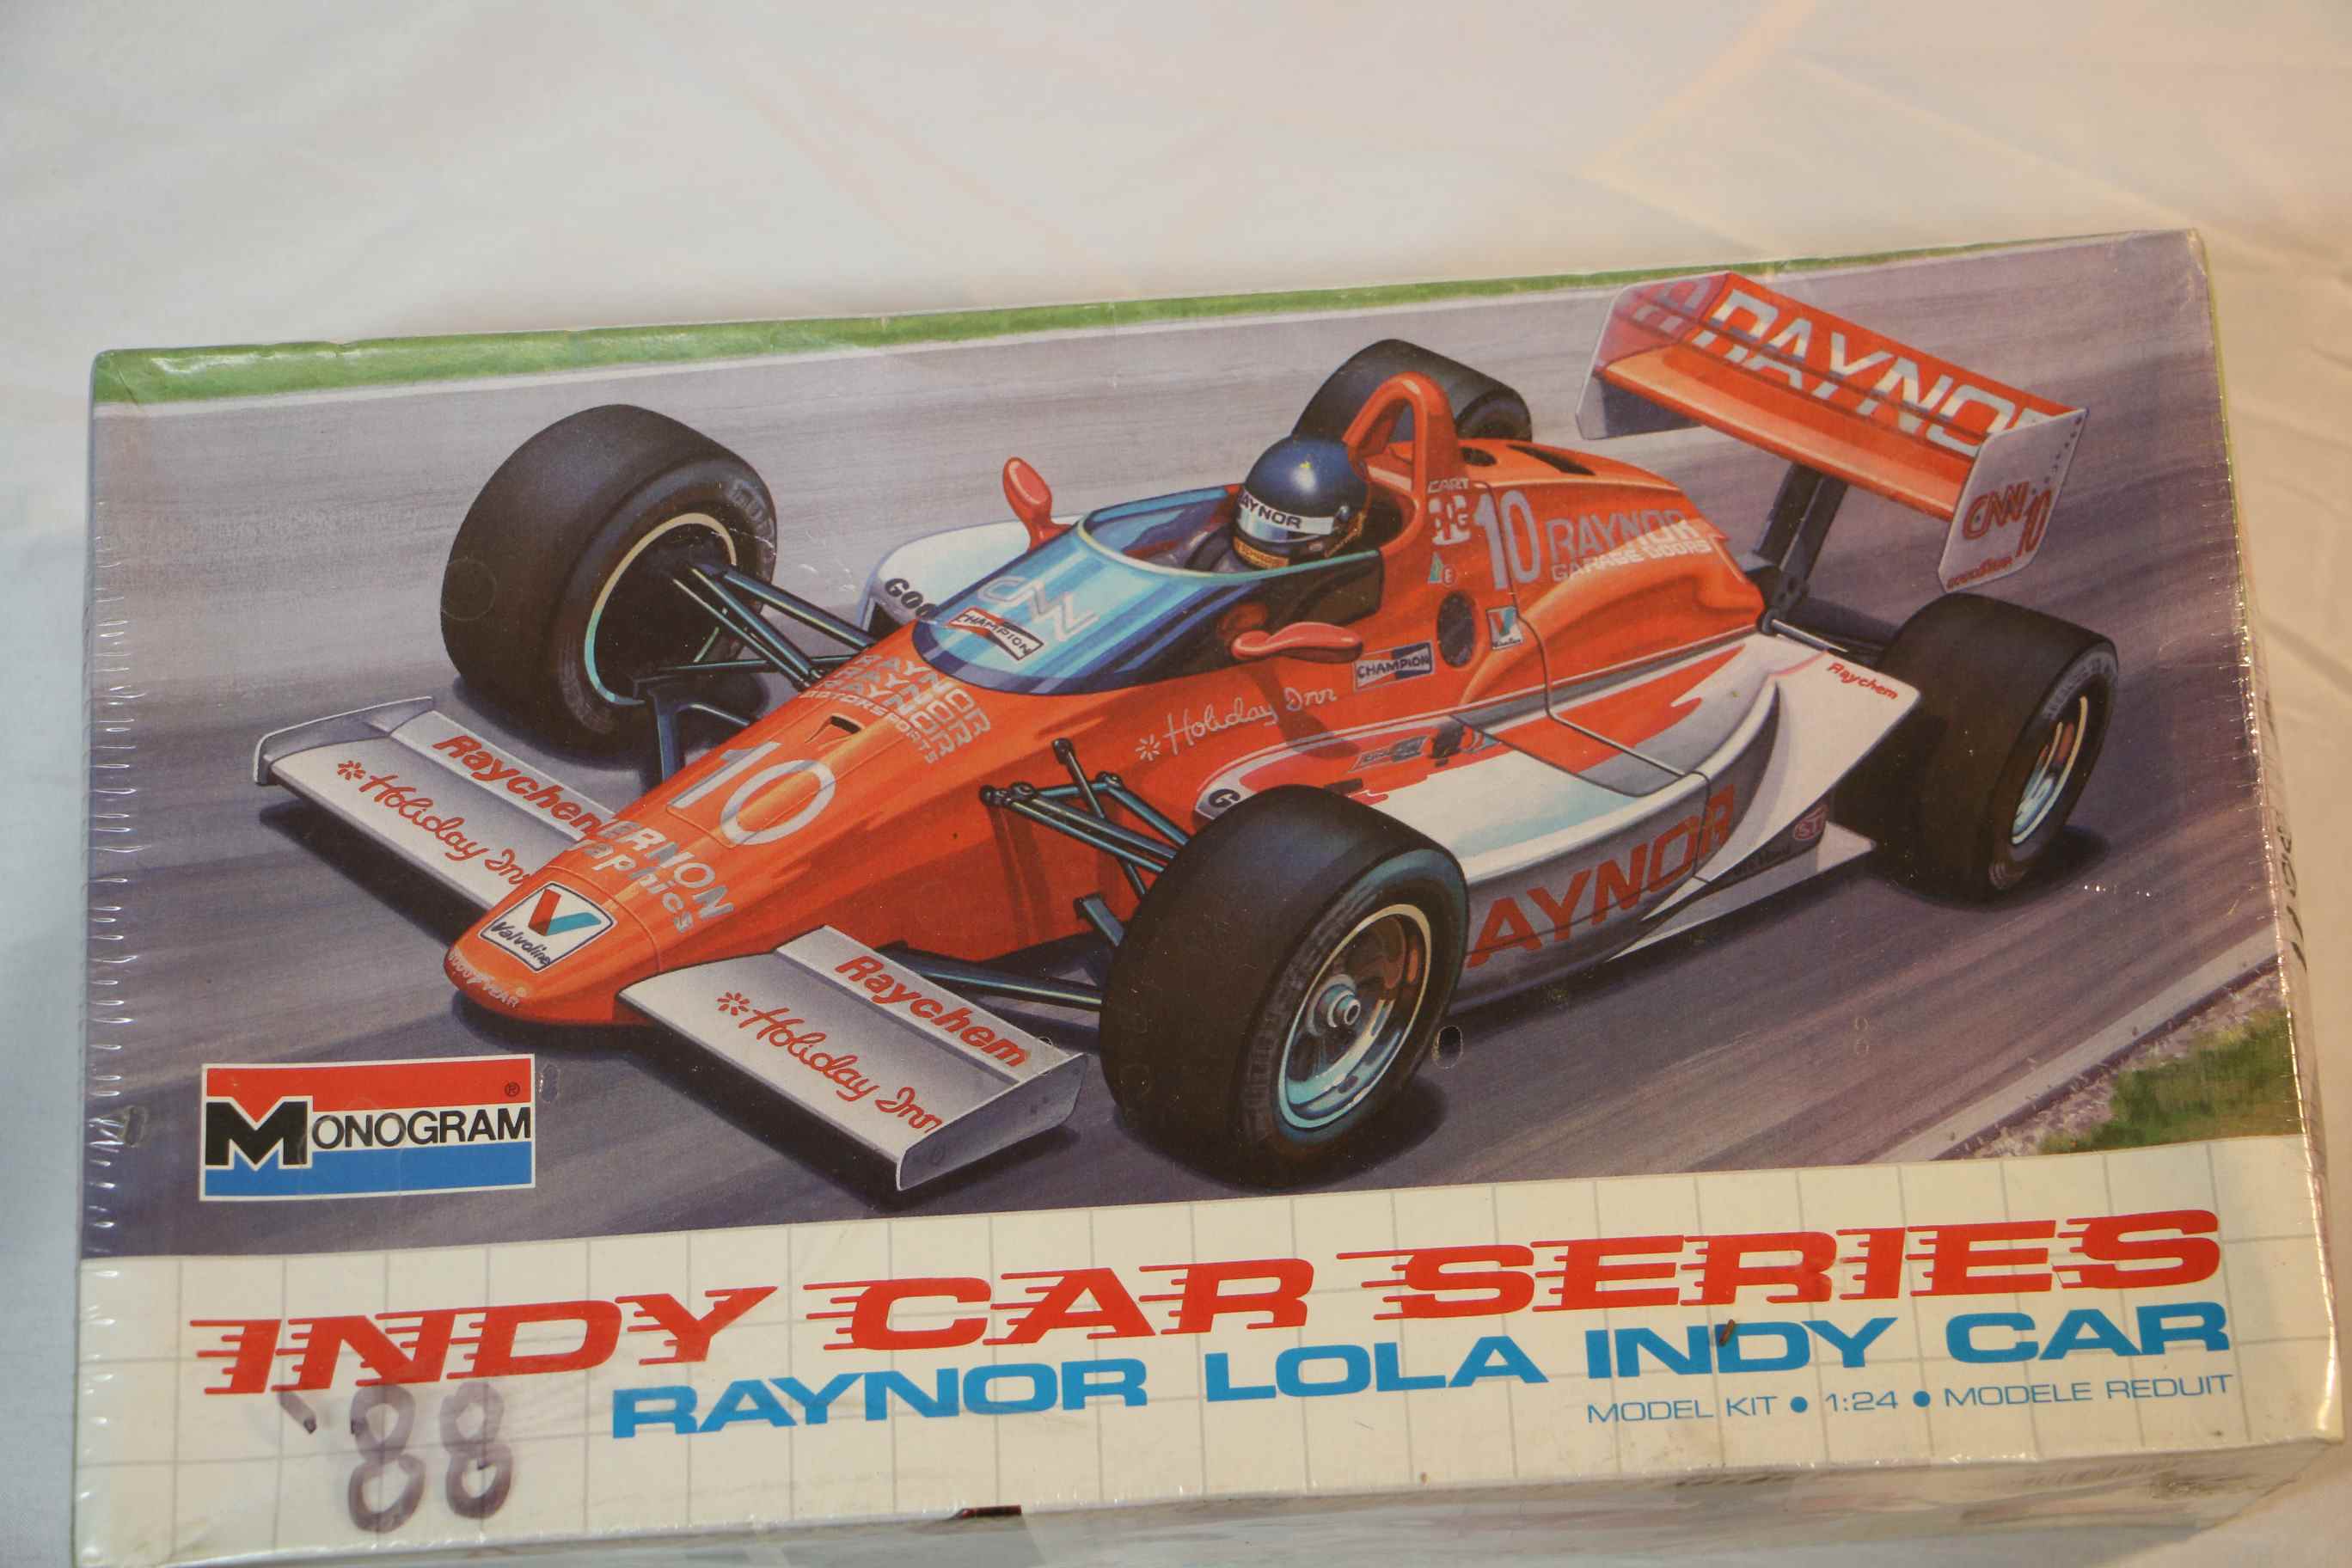 MON2909 - Monogram 1/24 Raynor Lola Indy Car